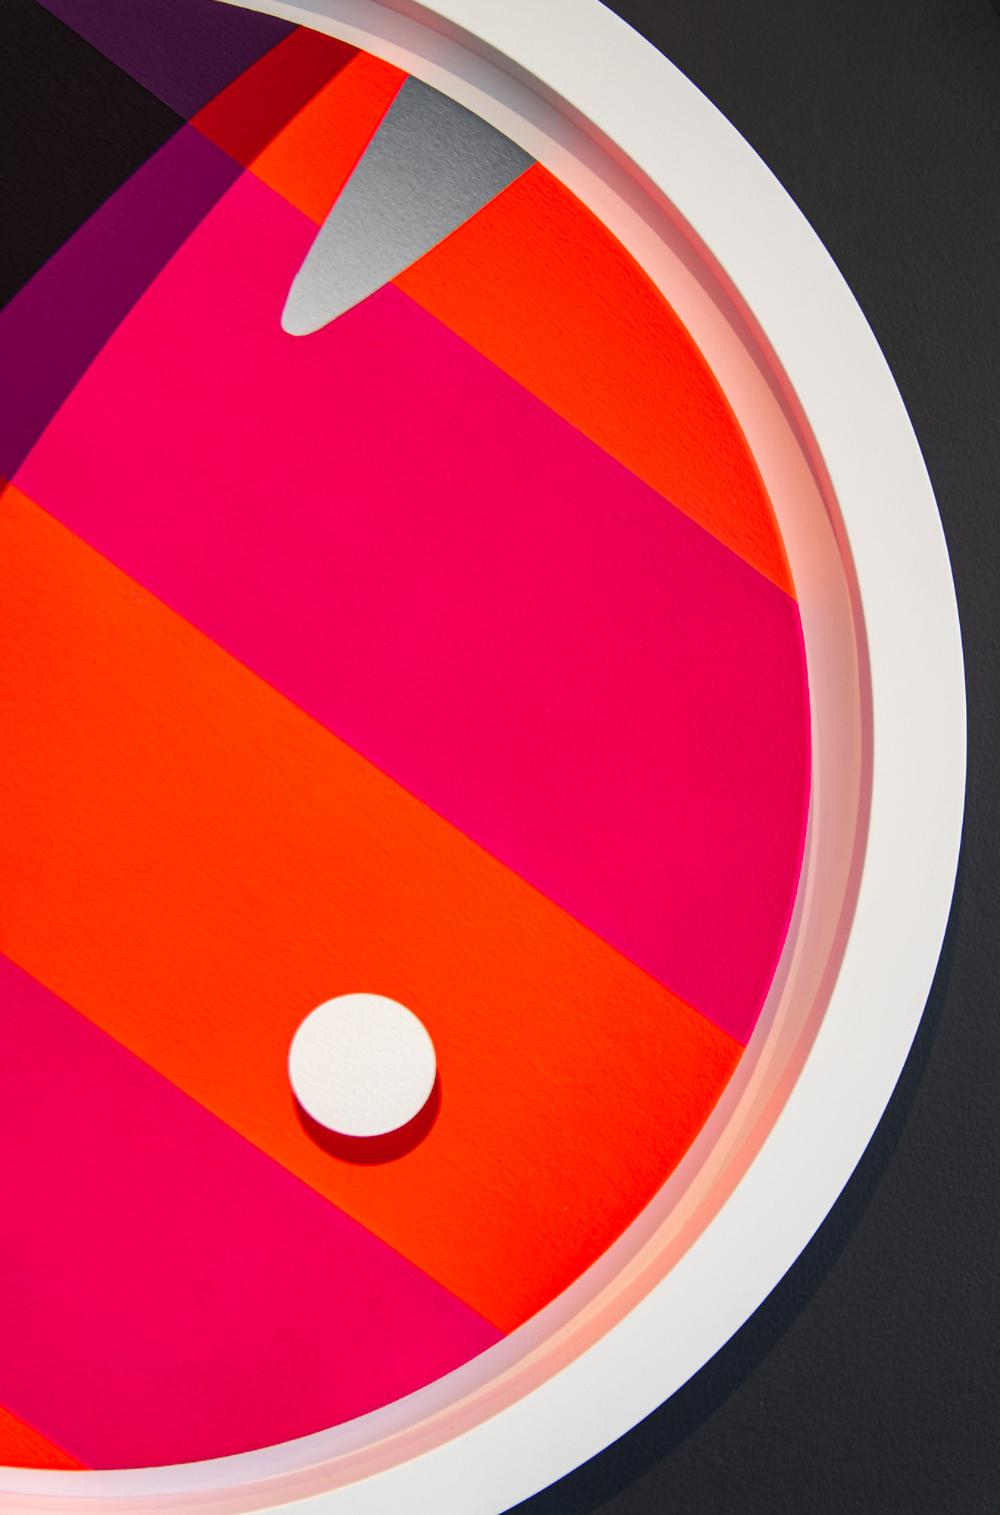 Chromatose - graphic, orange, pink, black, geometric, tondo, acrylic on panel - Abstract Painting by Sylvain Louis-Seize